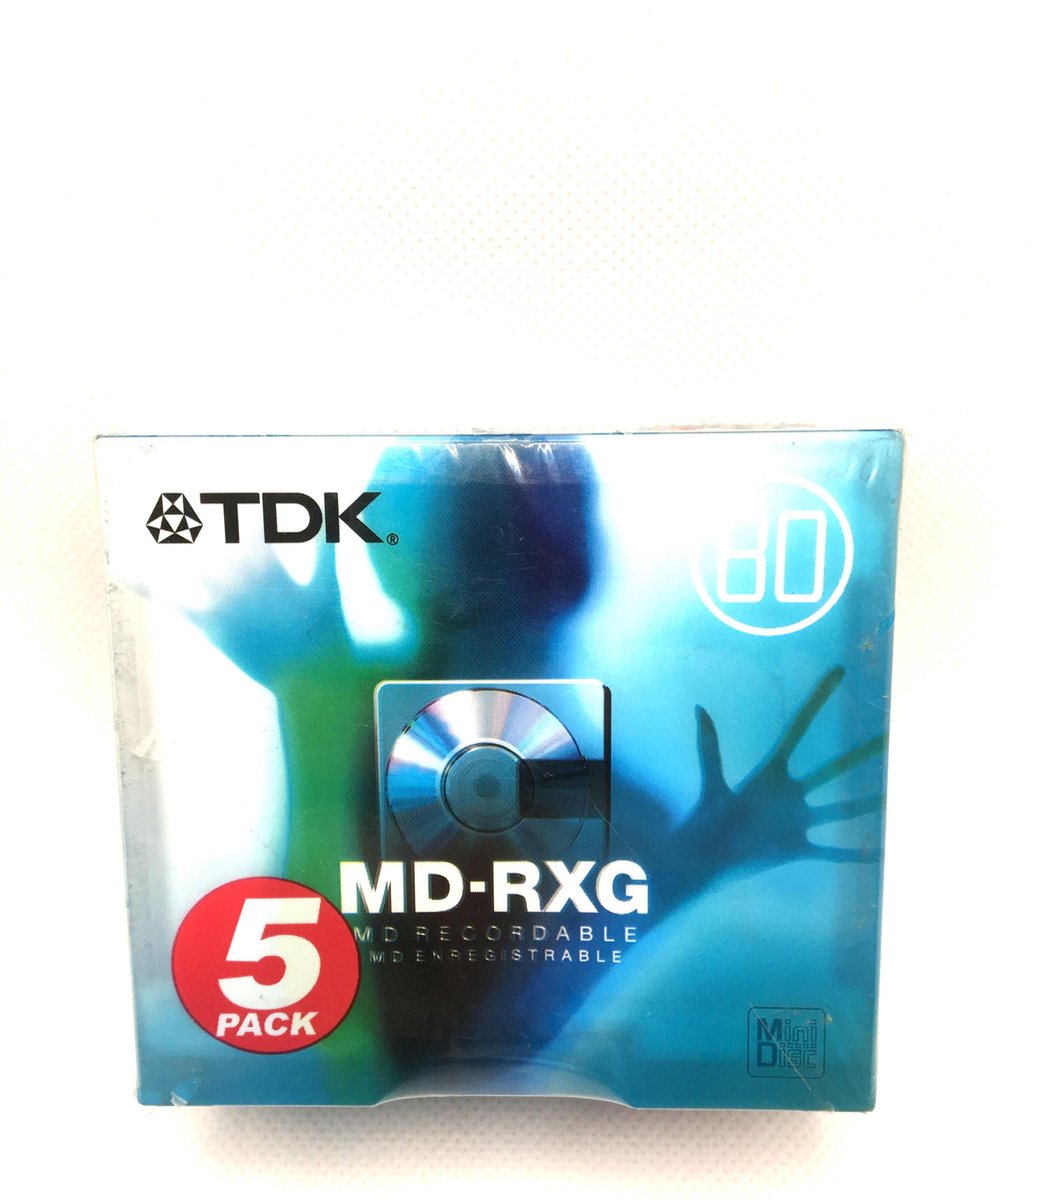 TDK 80 MD-RXG Mini Disc 5 Pack | bol.com